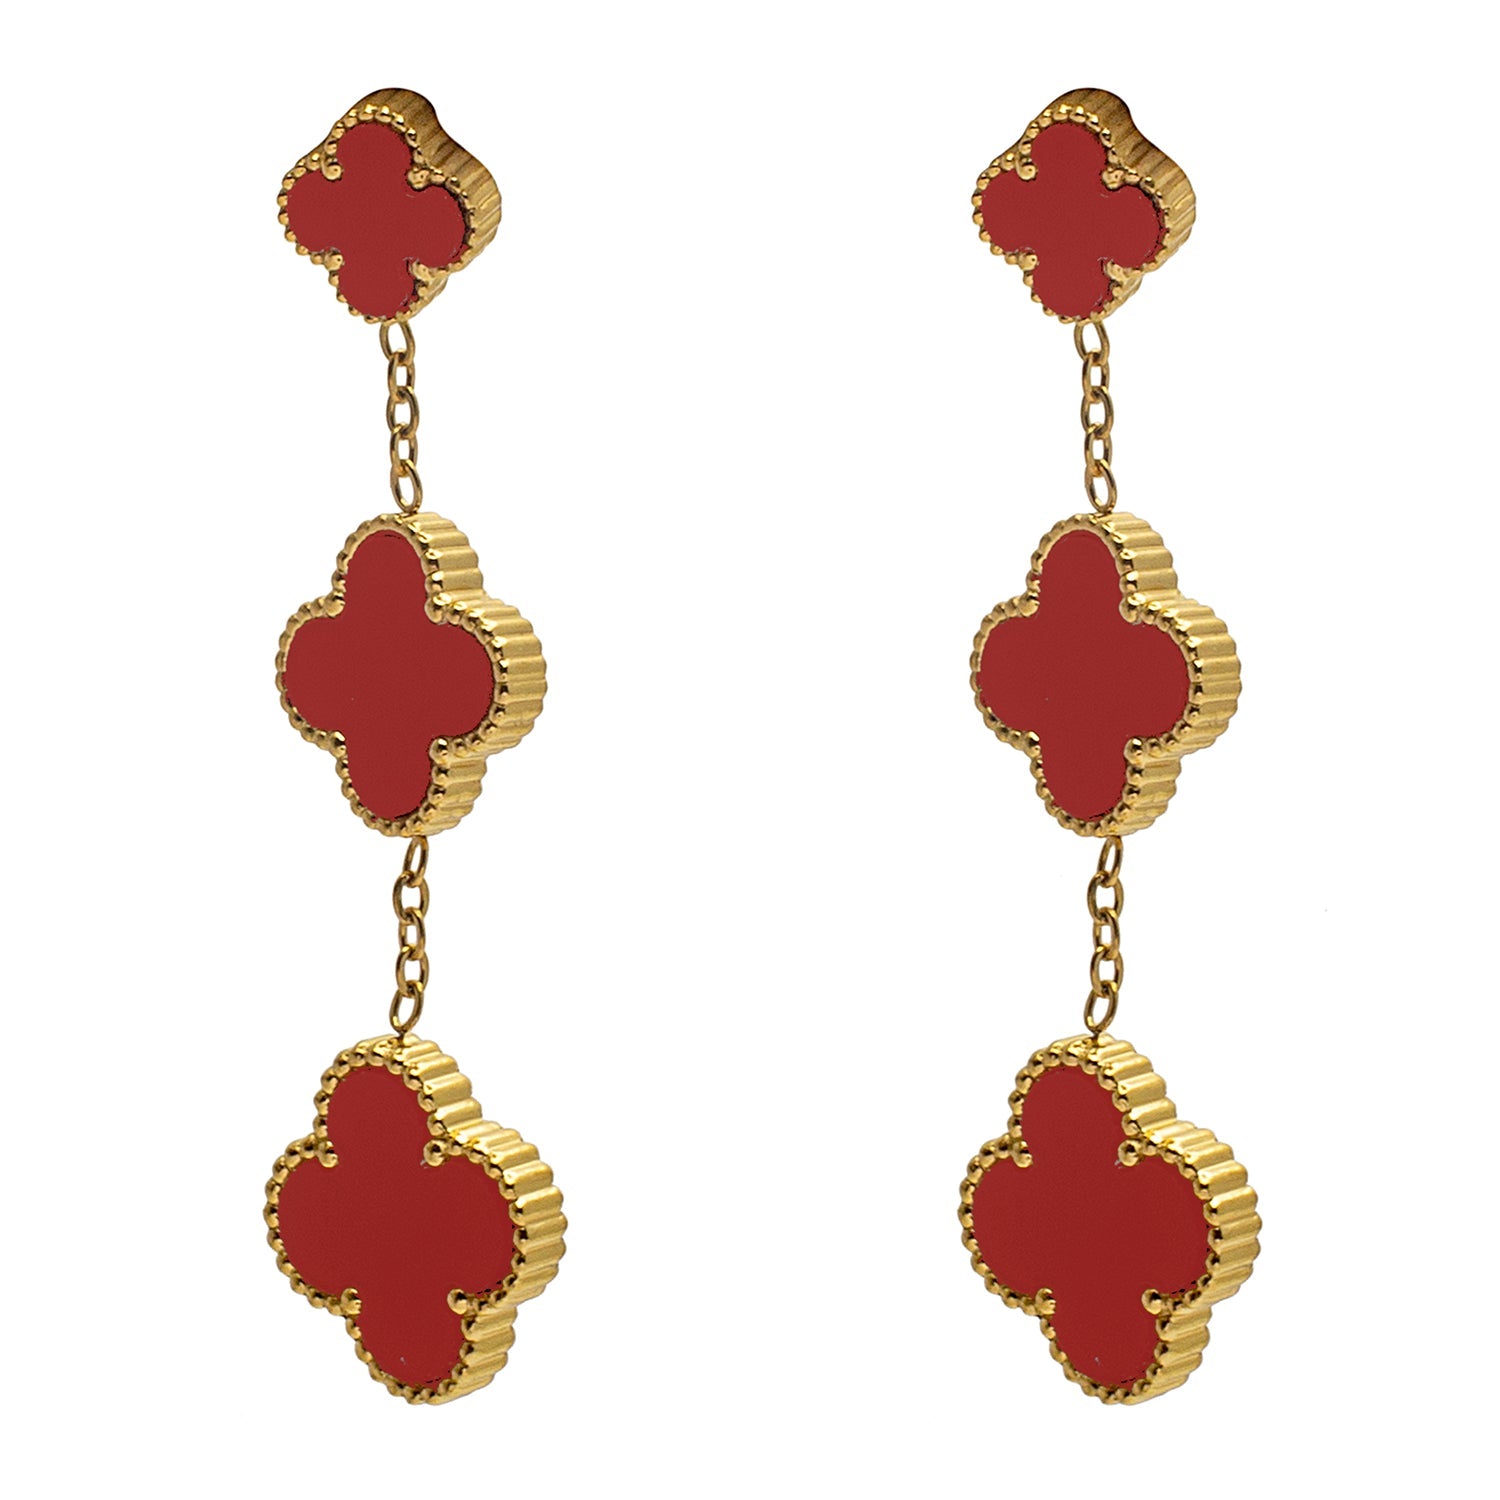 Clip on Earrings Burgundy Teardrop Filigree Earrings 3 1/8 Long Moroccan  Medallion Big Dangle Large Non Pierced Clips Dark Red Wine Maroon - Etsy |  Clip on earrings, Red pendants, Sparkly earrings